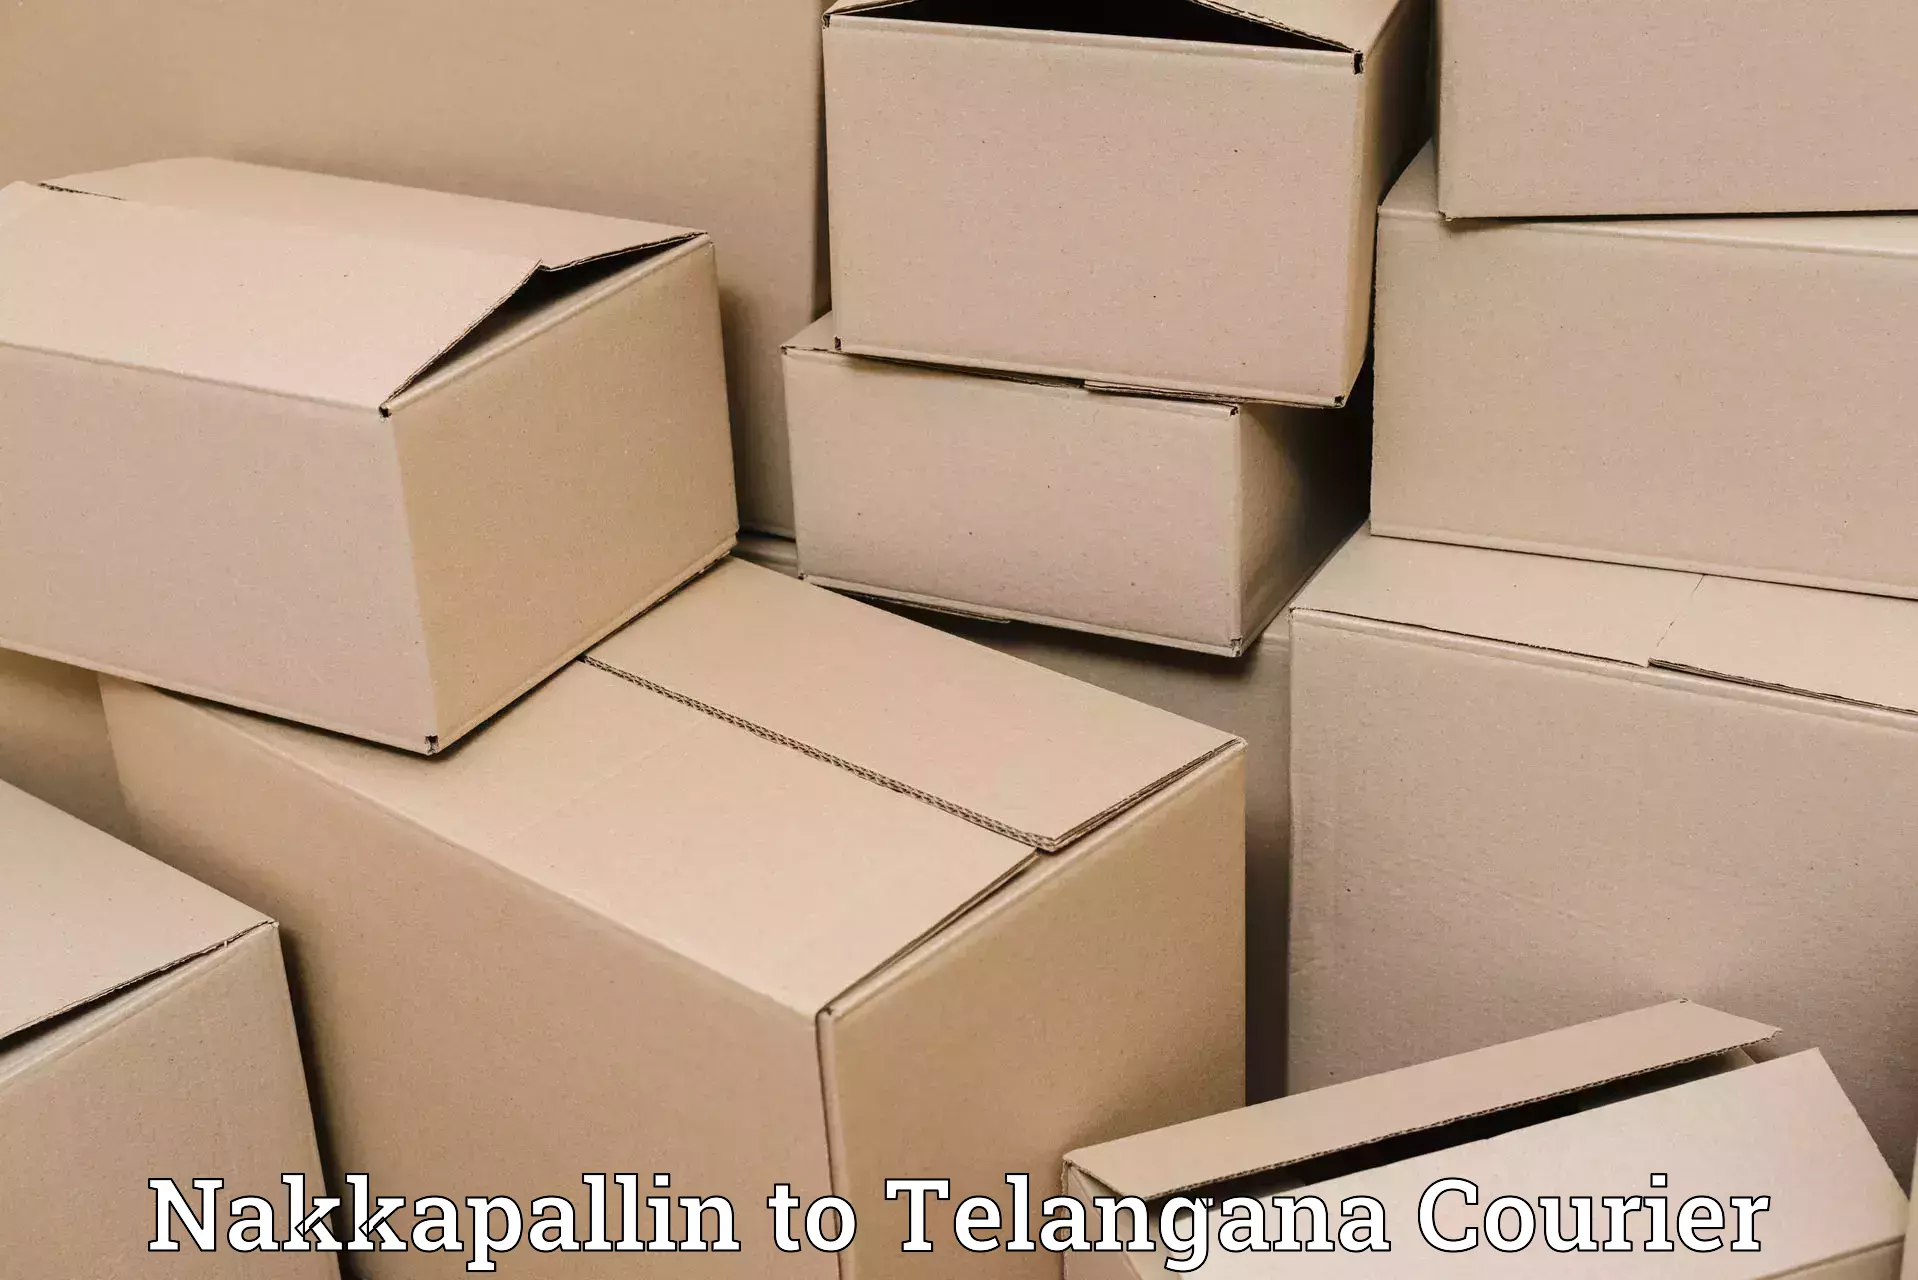 Modern delivery methods Nakkapallin to Telangana